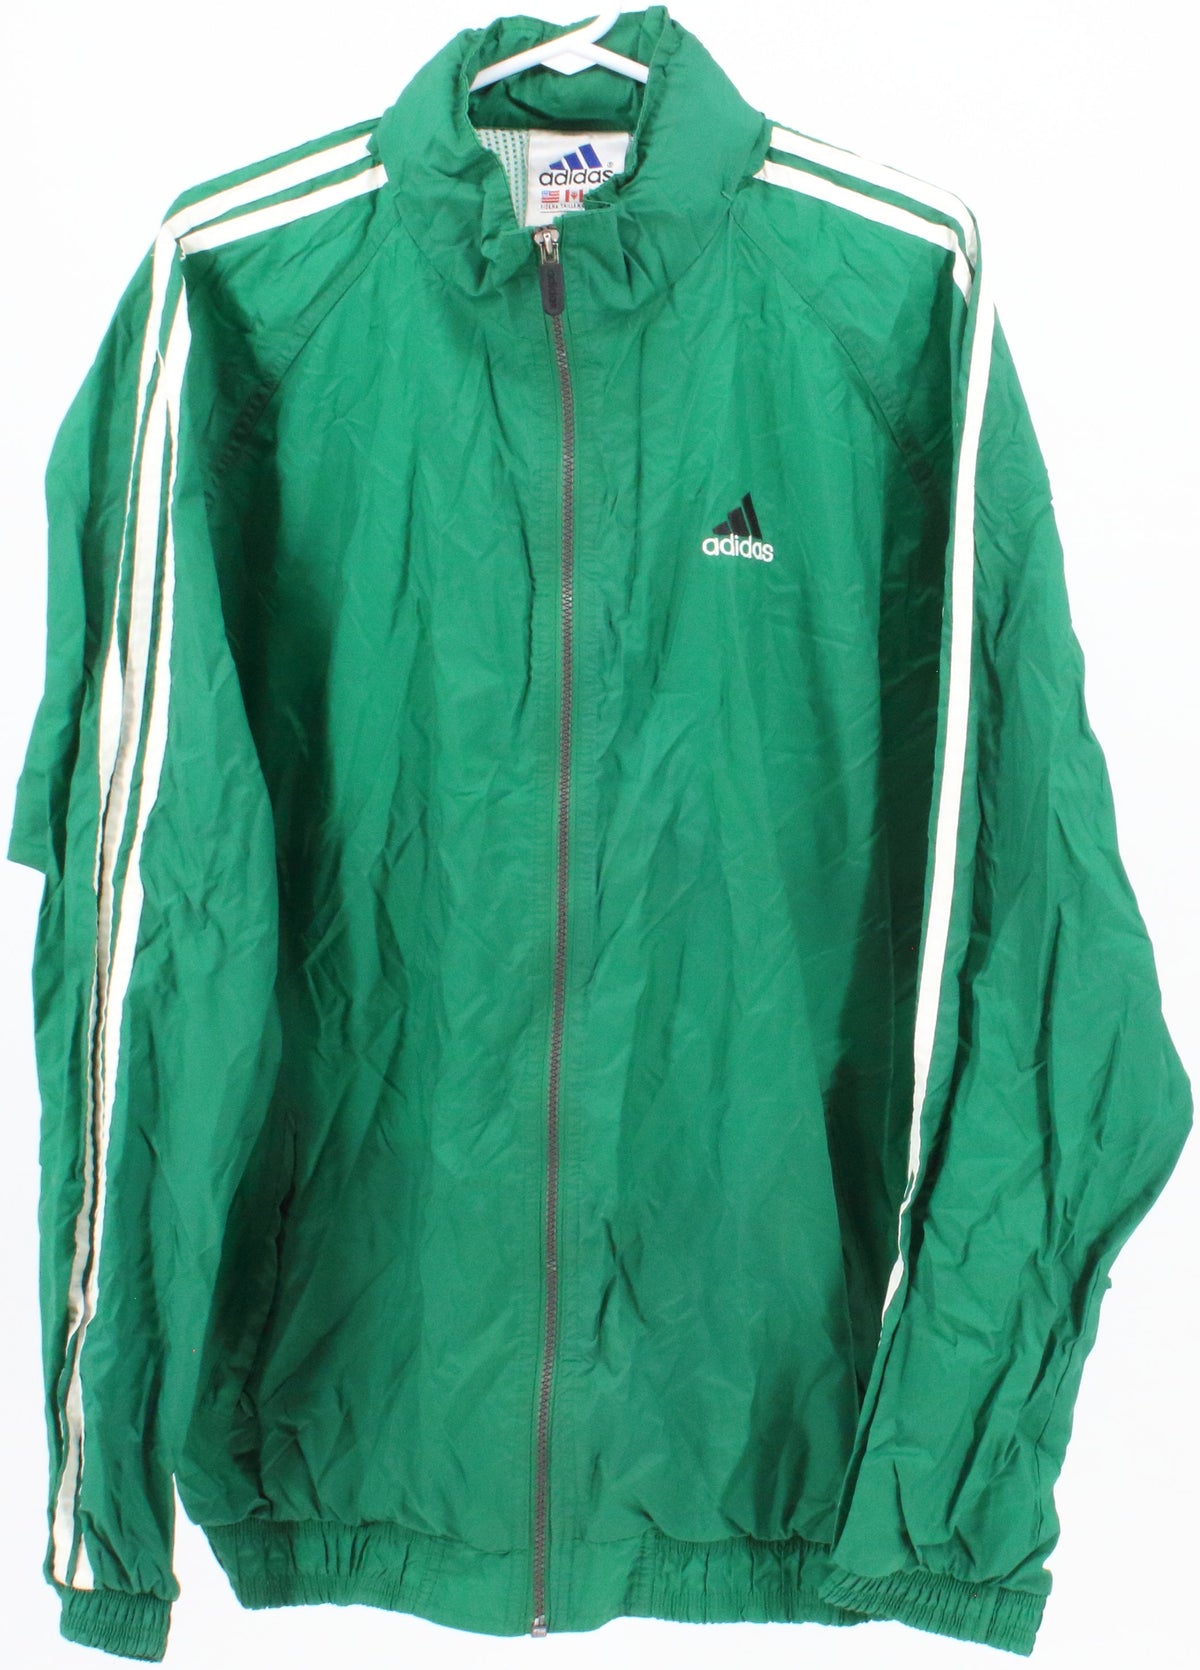 Adidas Green and White Nylon Jacket